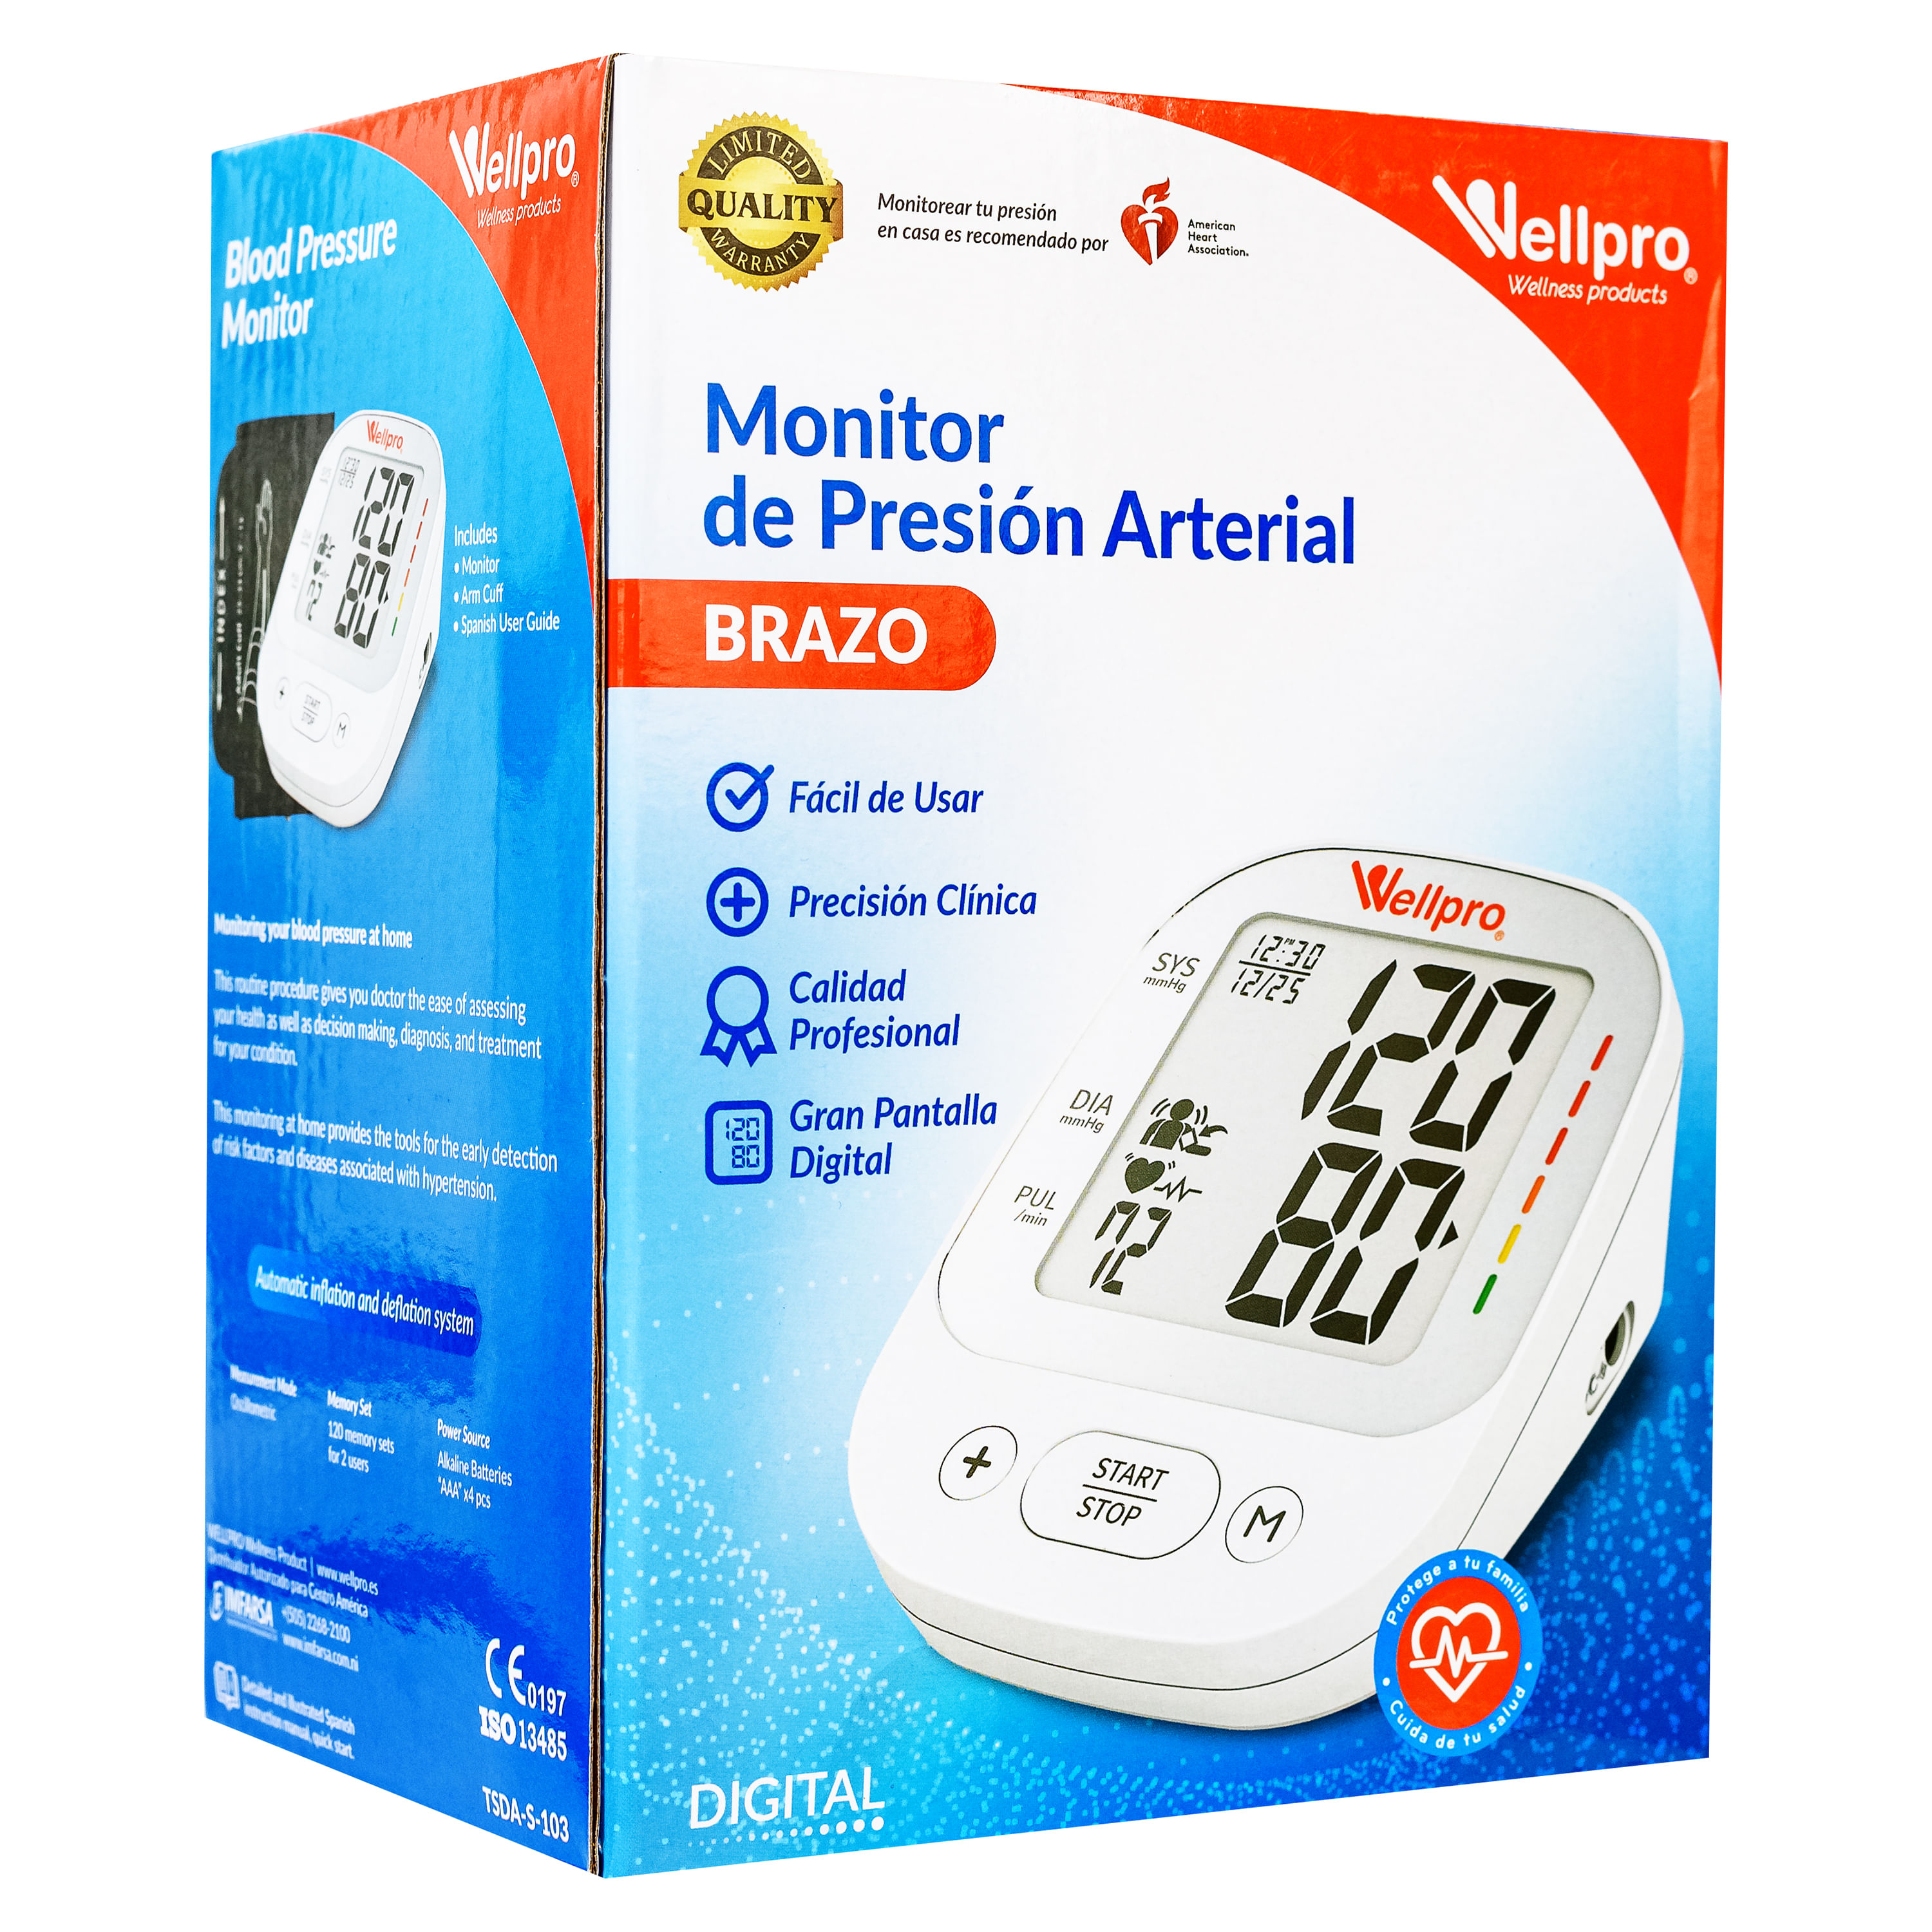 Wellpro-Monitor-De-Presion-Arterial-Wellpro-Brazo-1-21125